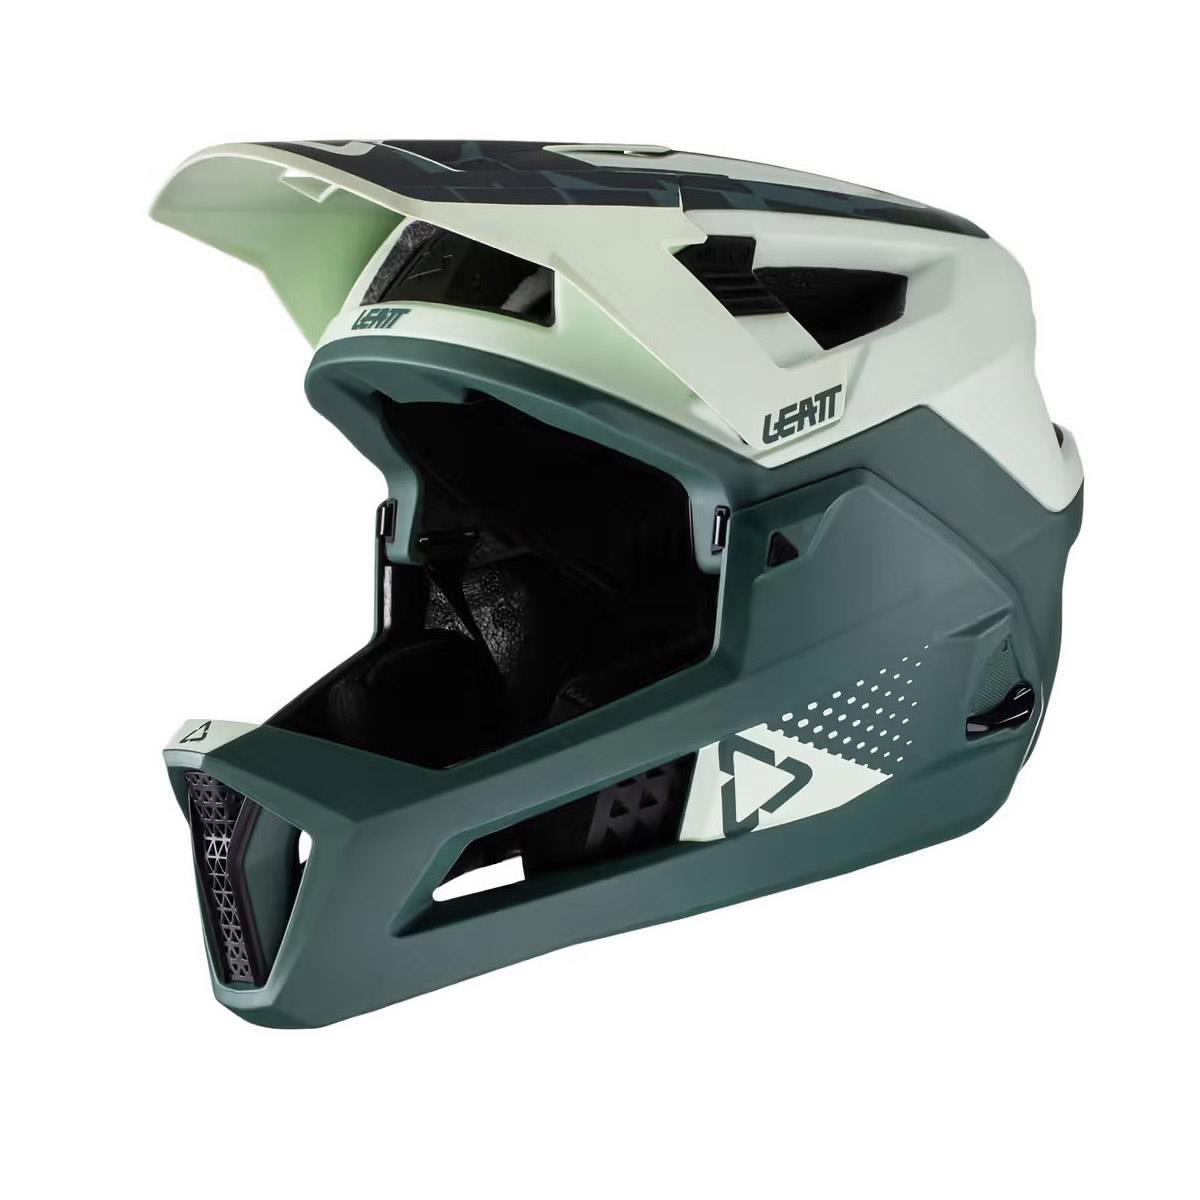 Mtb Helmet Enduro 4.0 removable chin green size M (55-59cm)